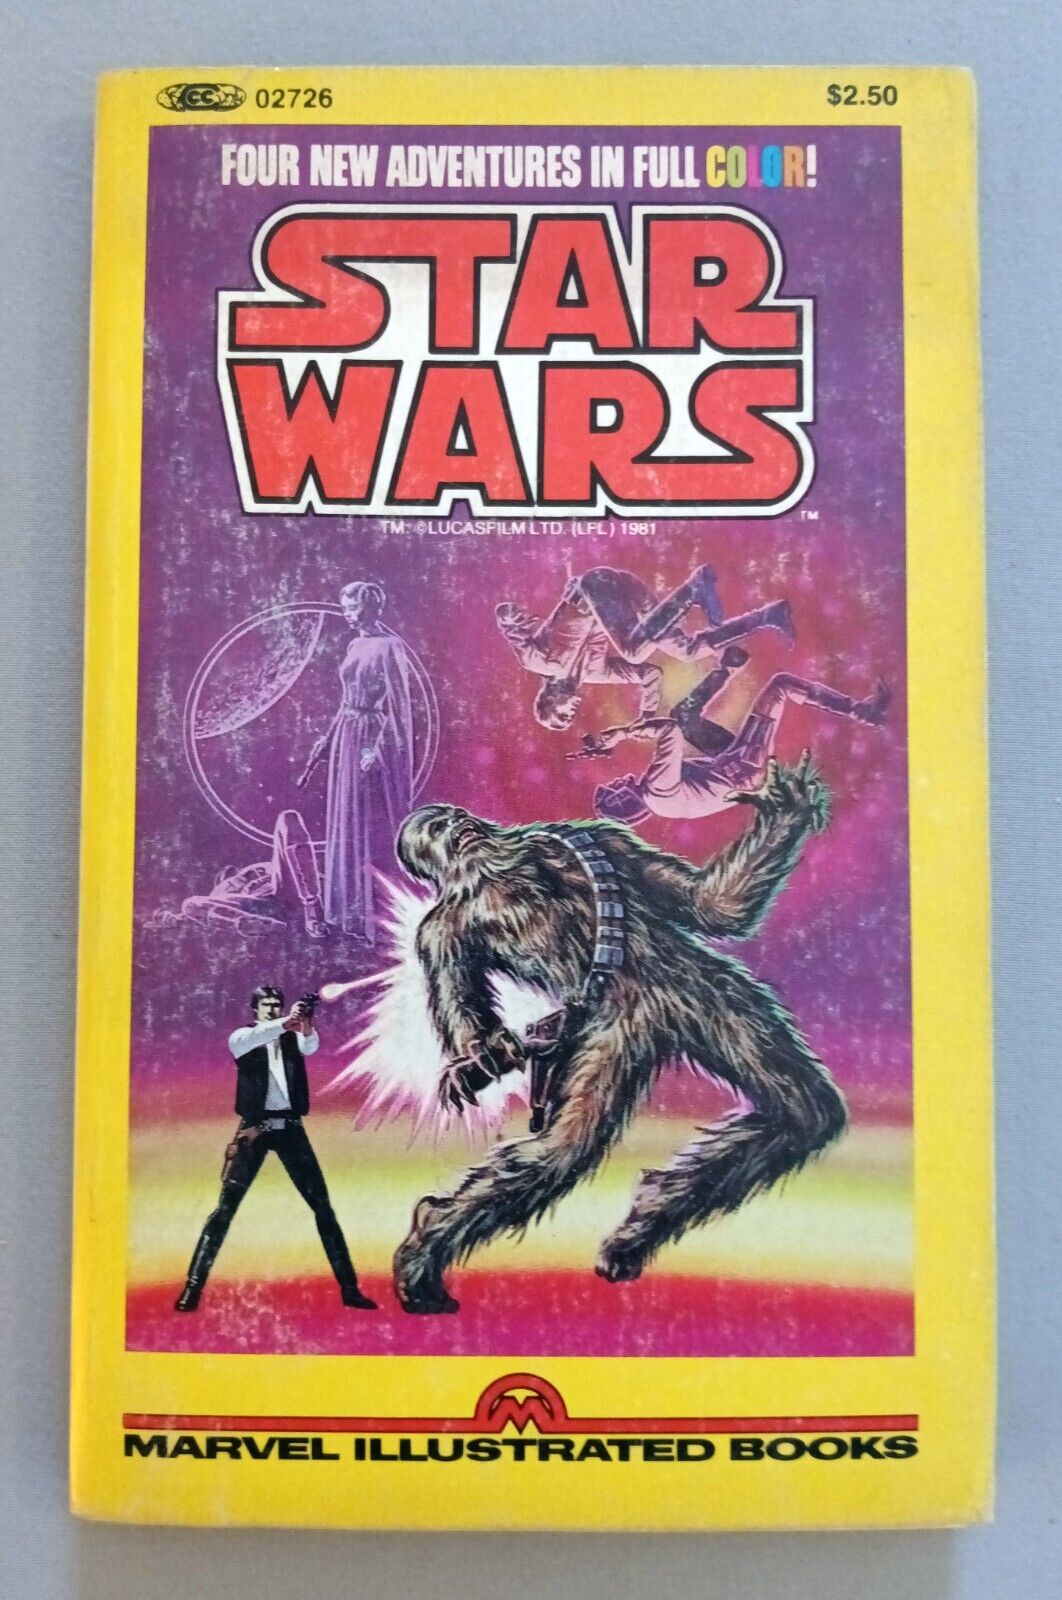 MARVEL ILLUSTRATED BOOKS, STAR WARS, FOUR NEW ADVENTURES, PAPERBACK, 1st, 1981